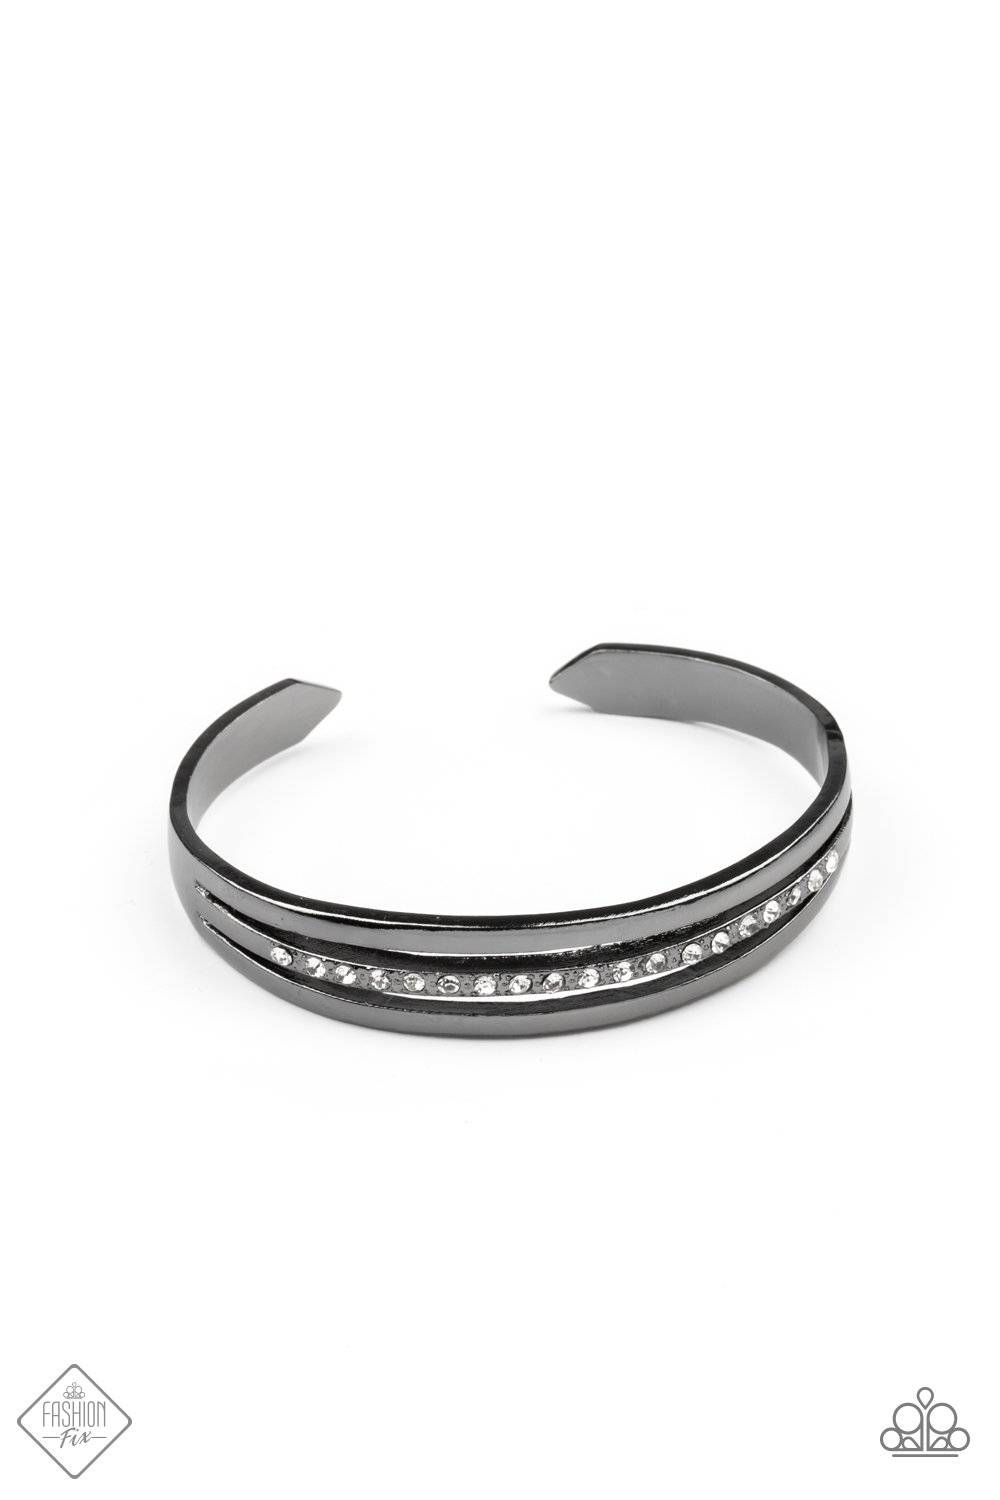 A Point Of Pride - Black and White Rhinestone Cuff Bracelet - Paparazzi Accessories - GlaMarous Titi Jewels